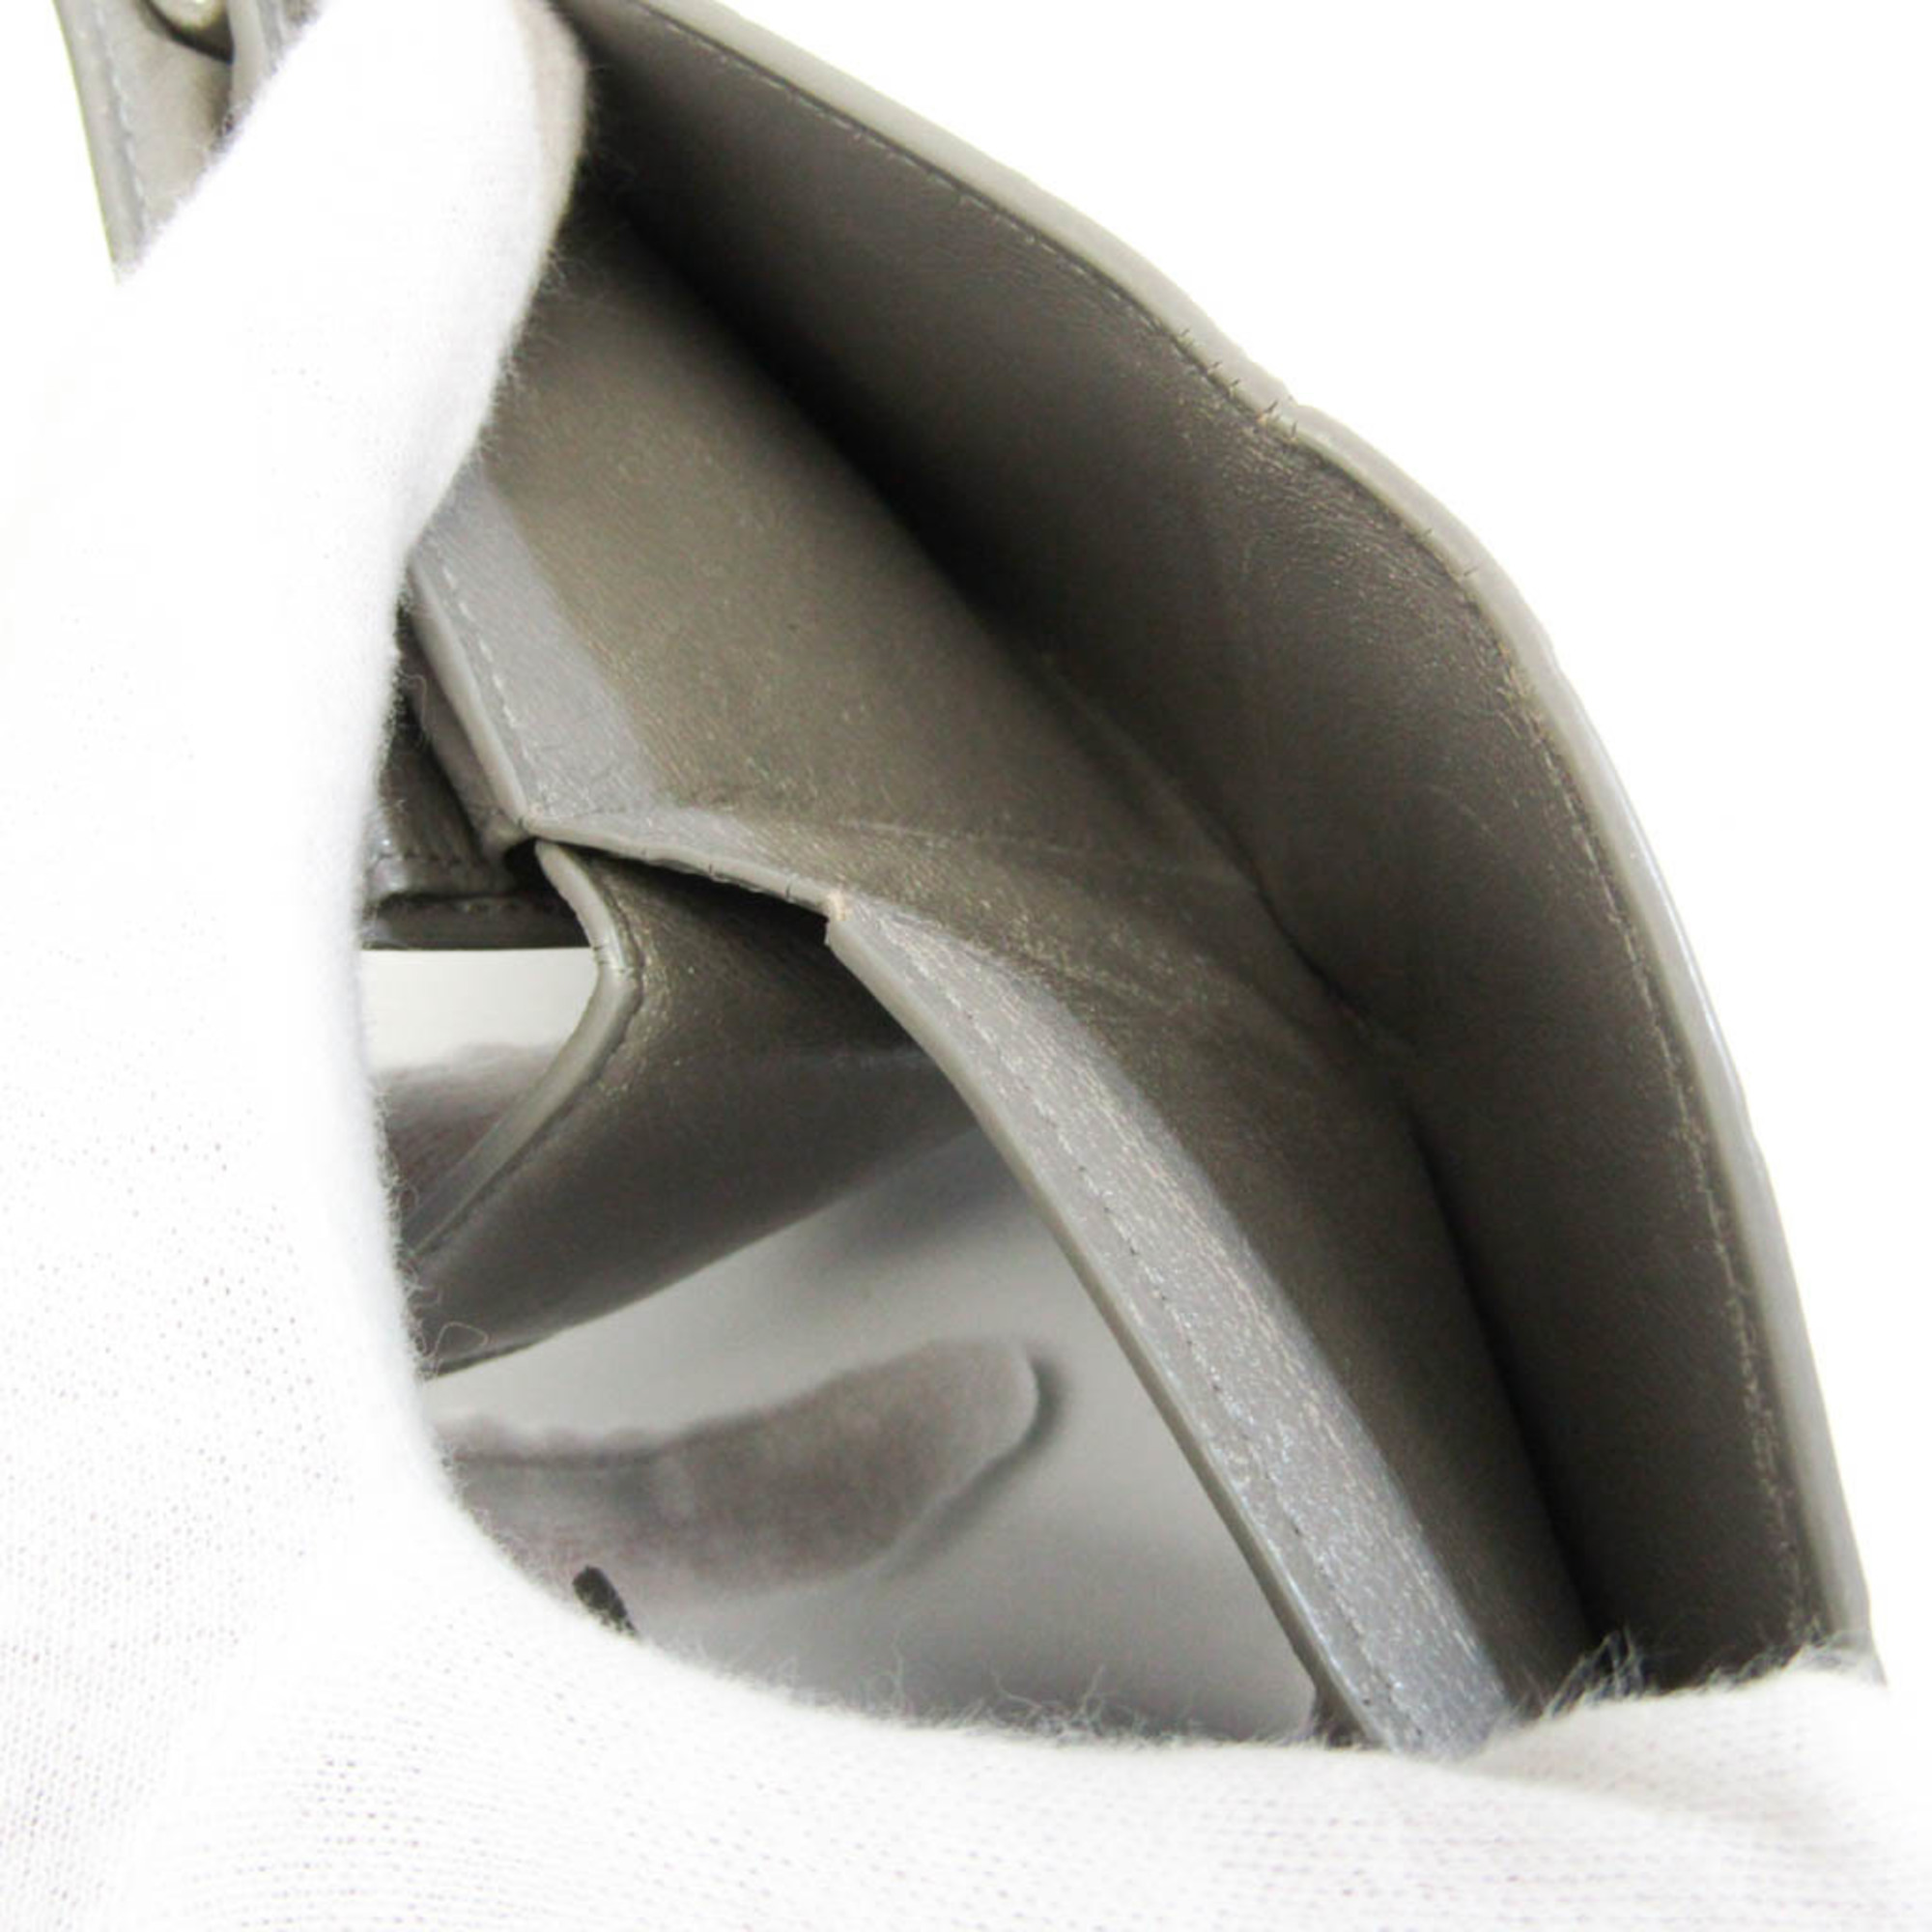 Balenciaga Papier 637450 Women,Men  Embossed Leather Wallet (tri-fold) Gray